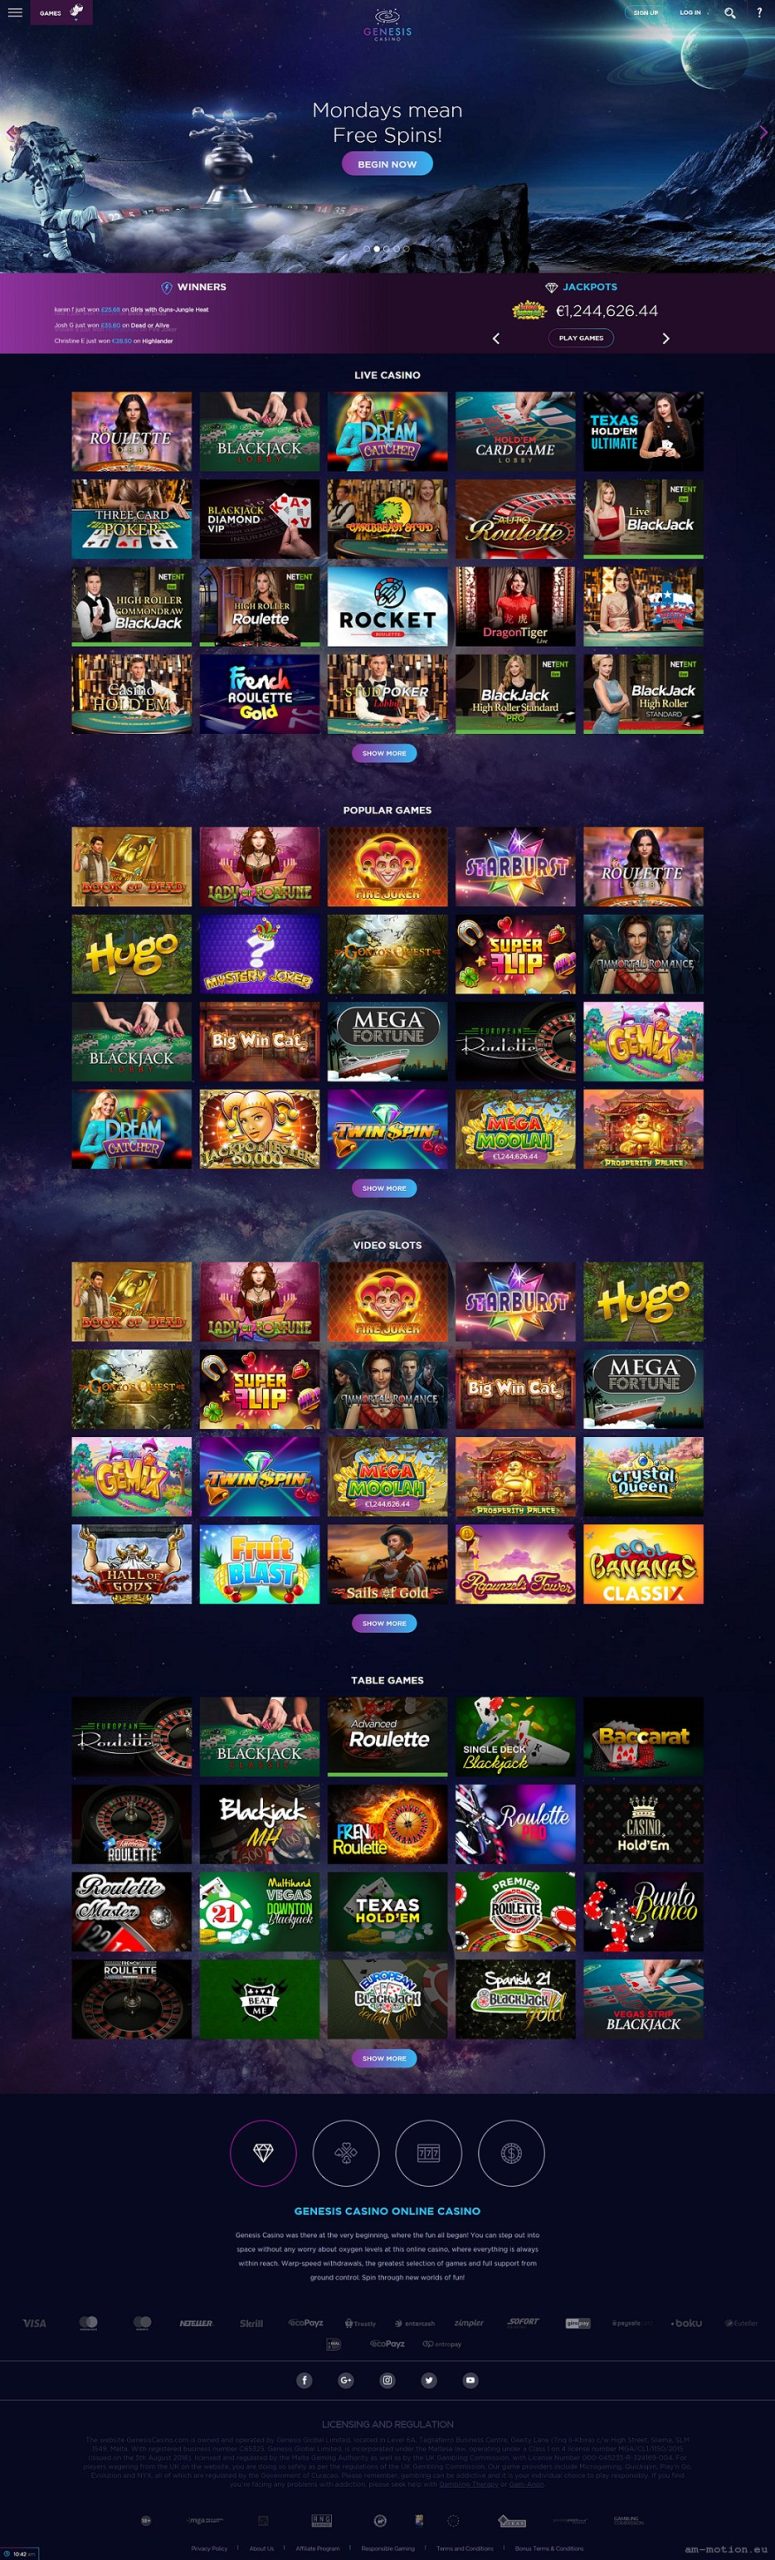 Genesis casino app